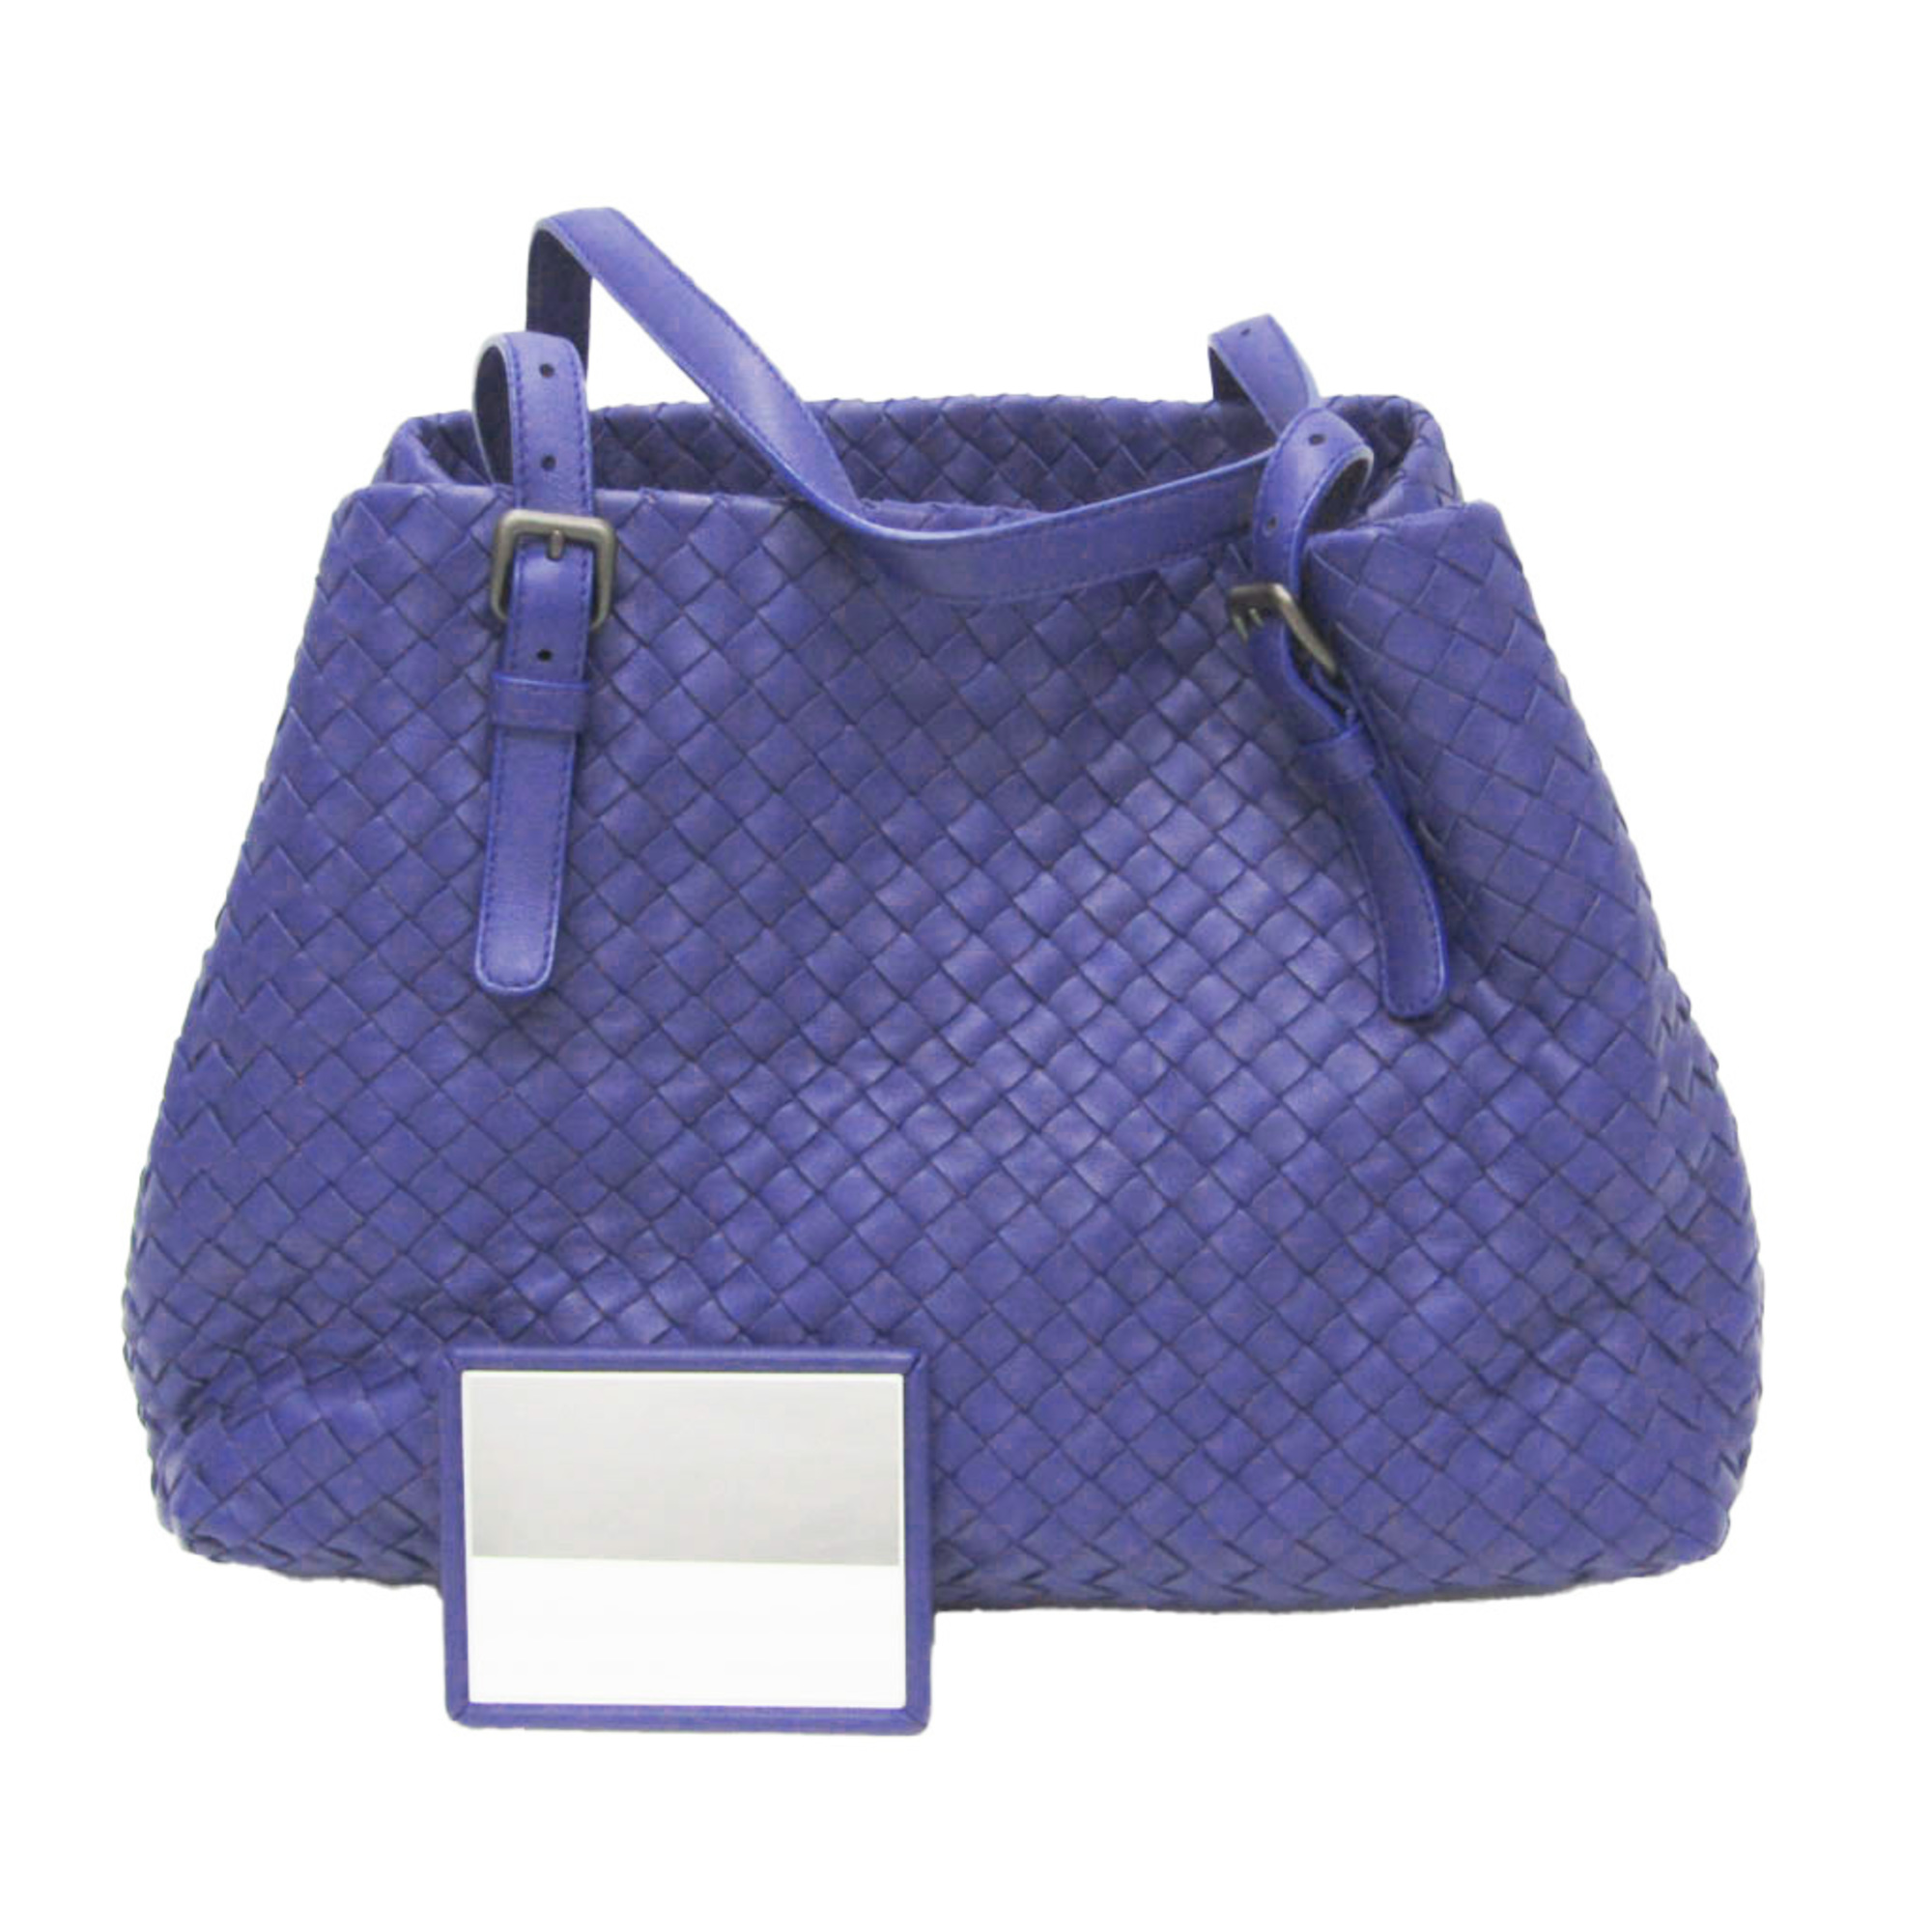 Bottega Veneta Intrecciato Women's Leather Tote Bag Blue